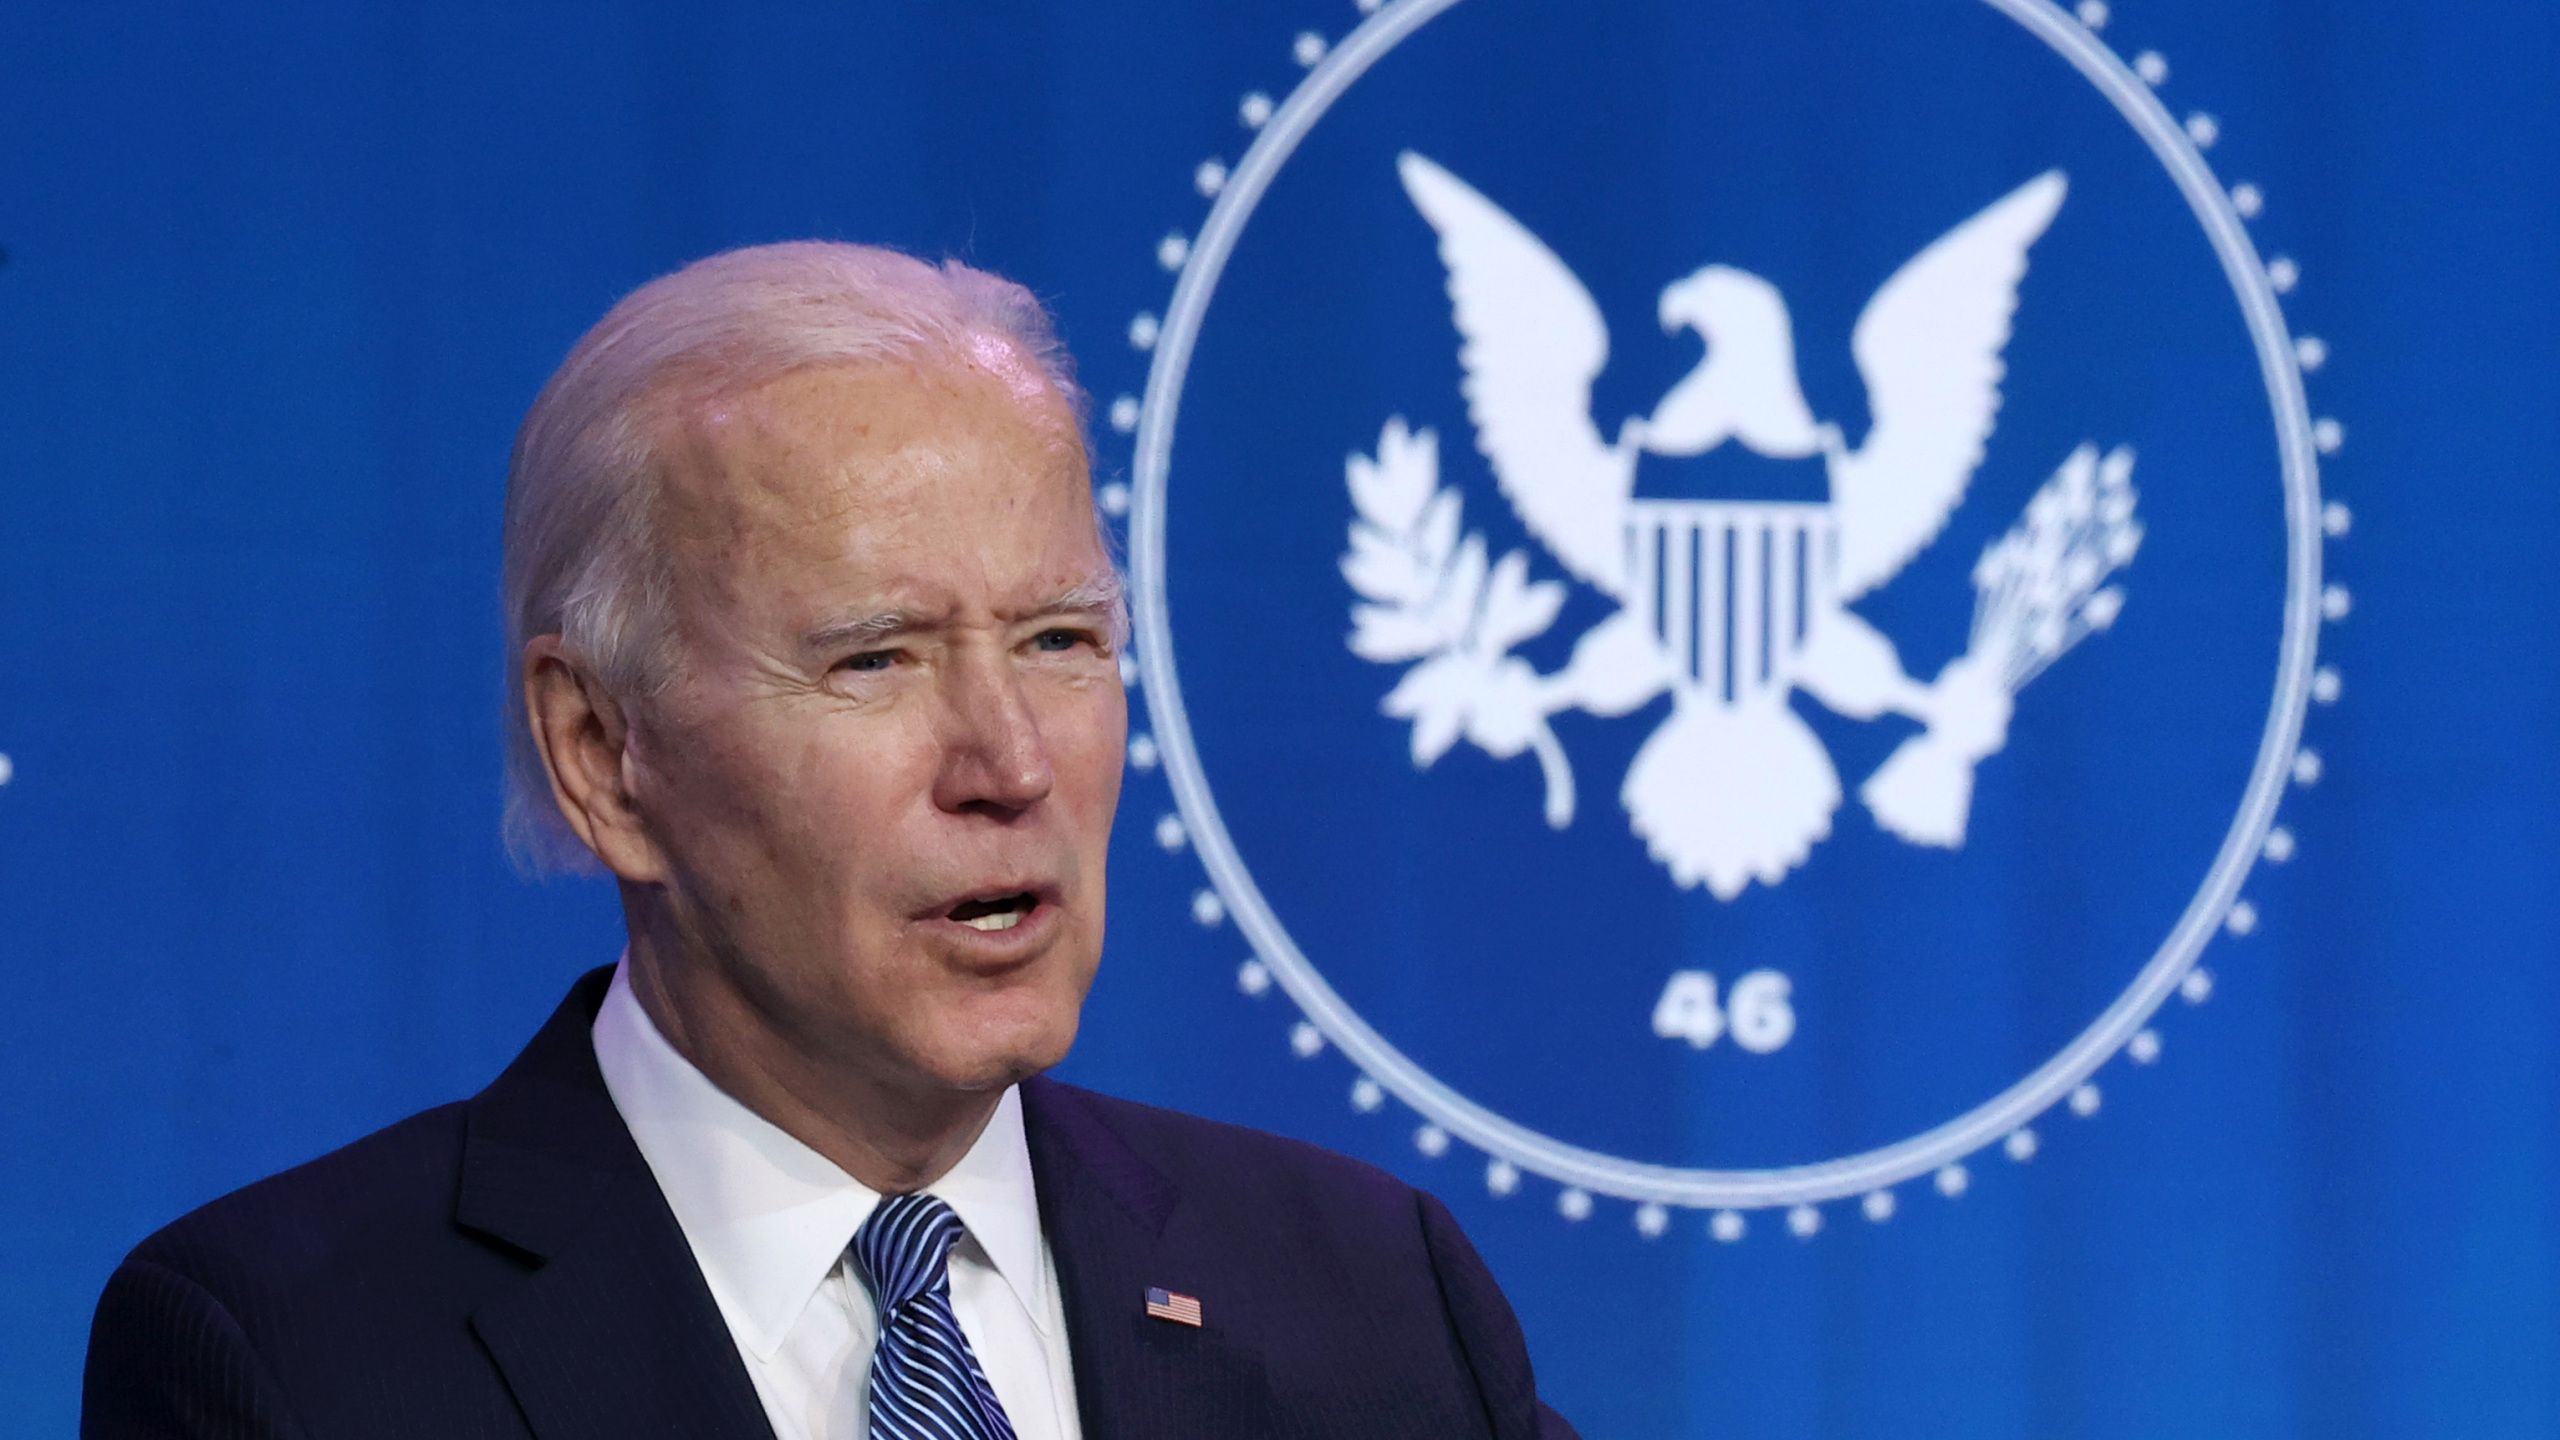 Biden's inauguration theme to be 'America United'